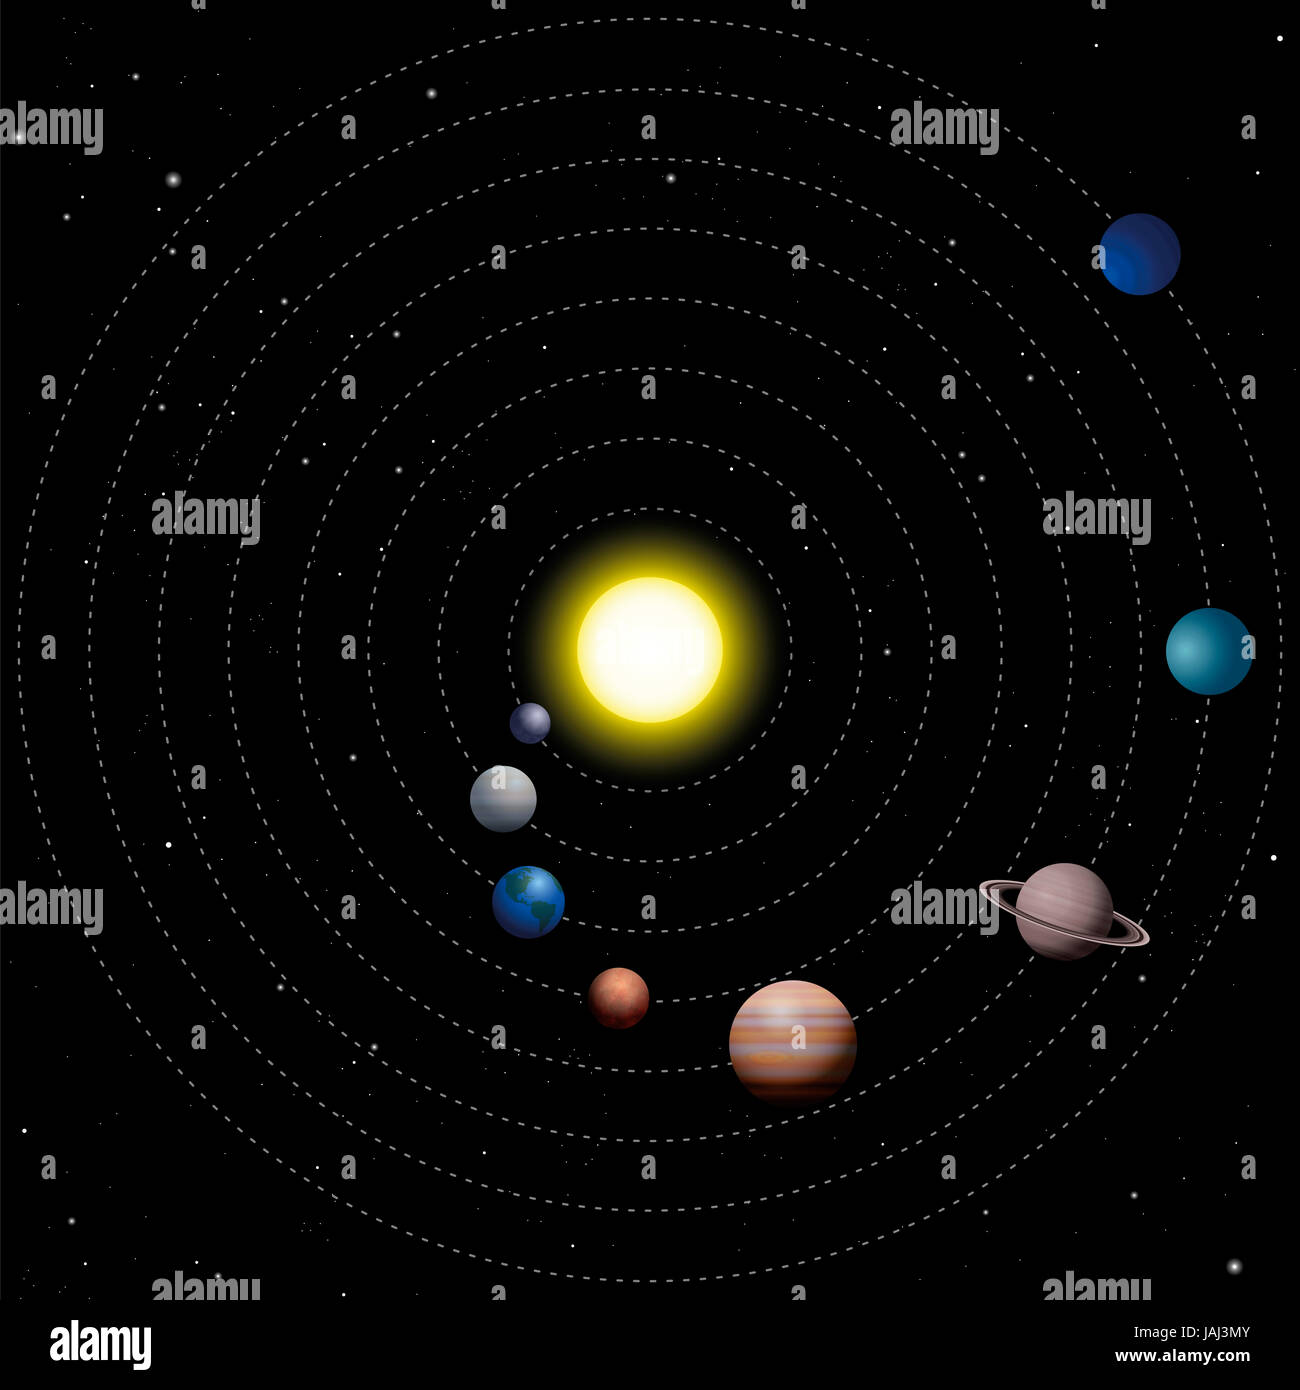 Solar system - schematic model of the sun with the eight planets that orbit it - Mercury, Venus, Earth, Mars, Jupiter, Saturn, Uranus, Neptune. Stock Photo